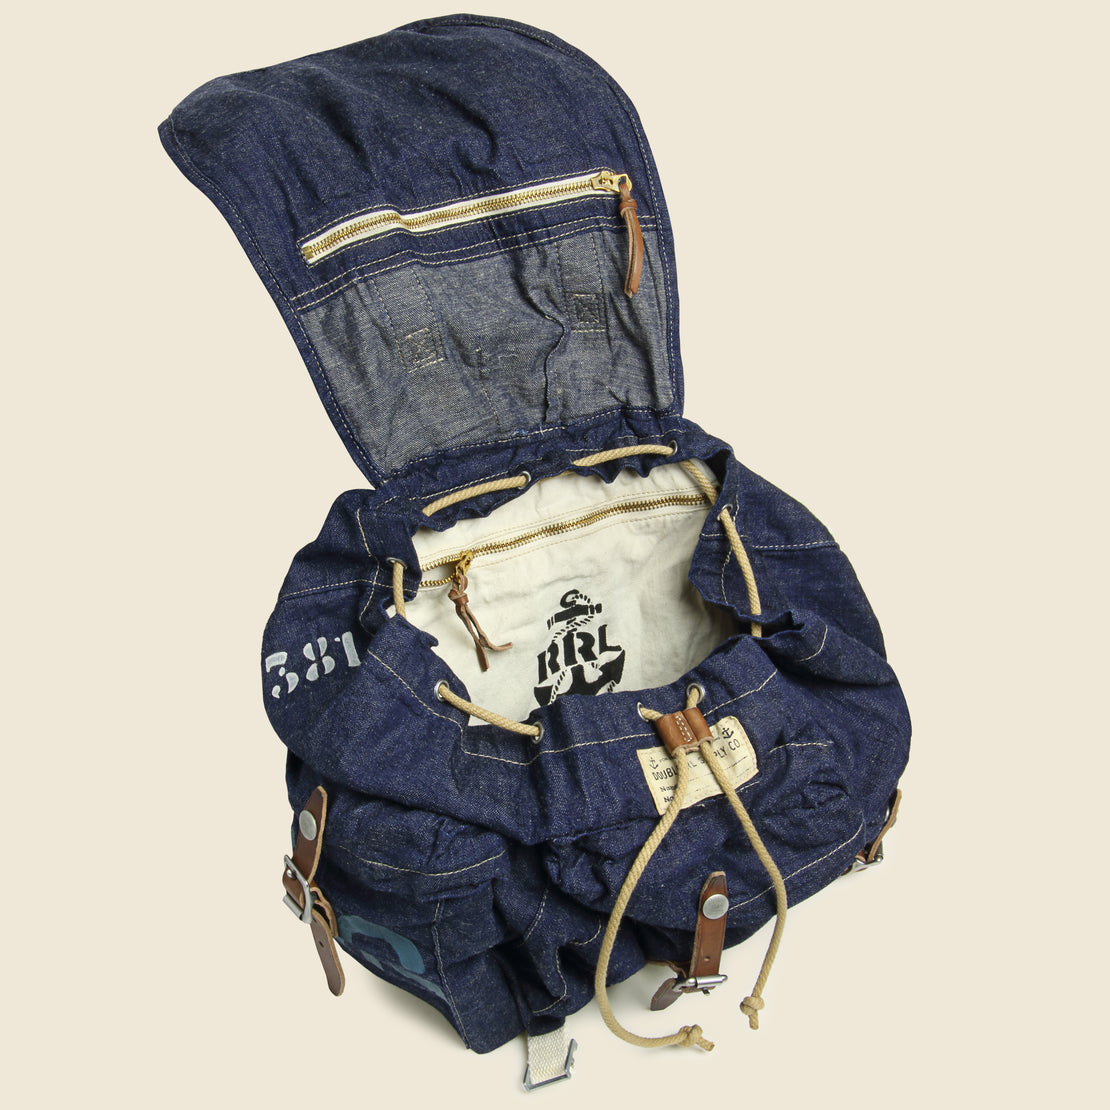 Collins Backpack - Navy